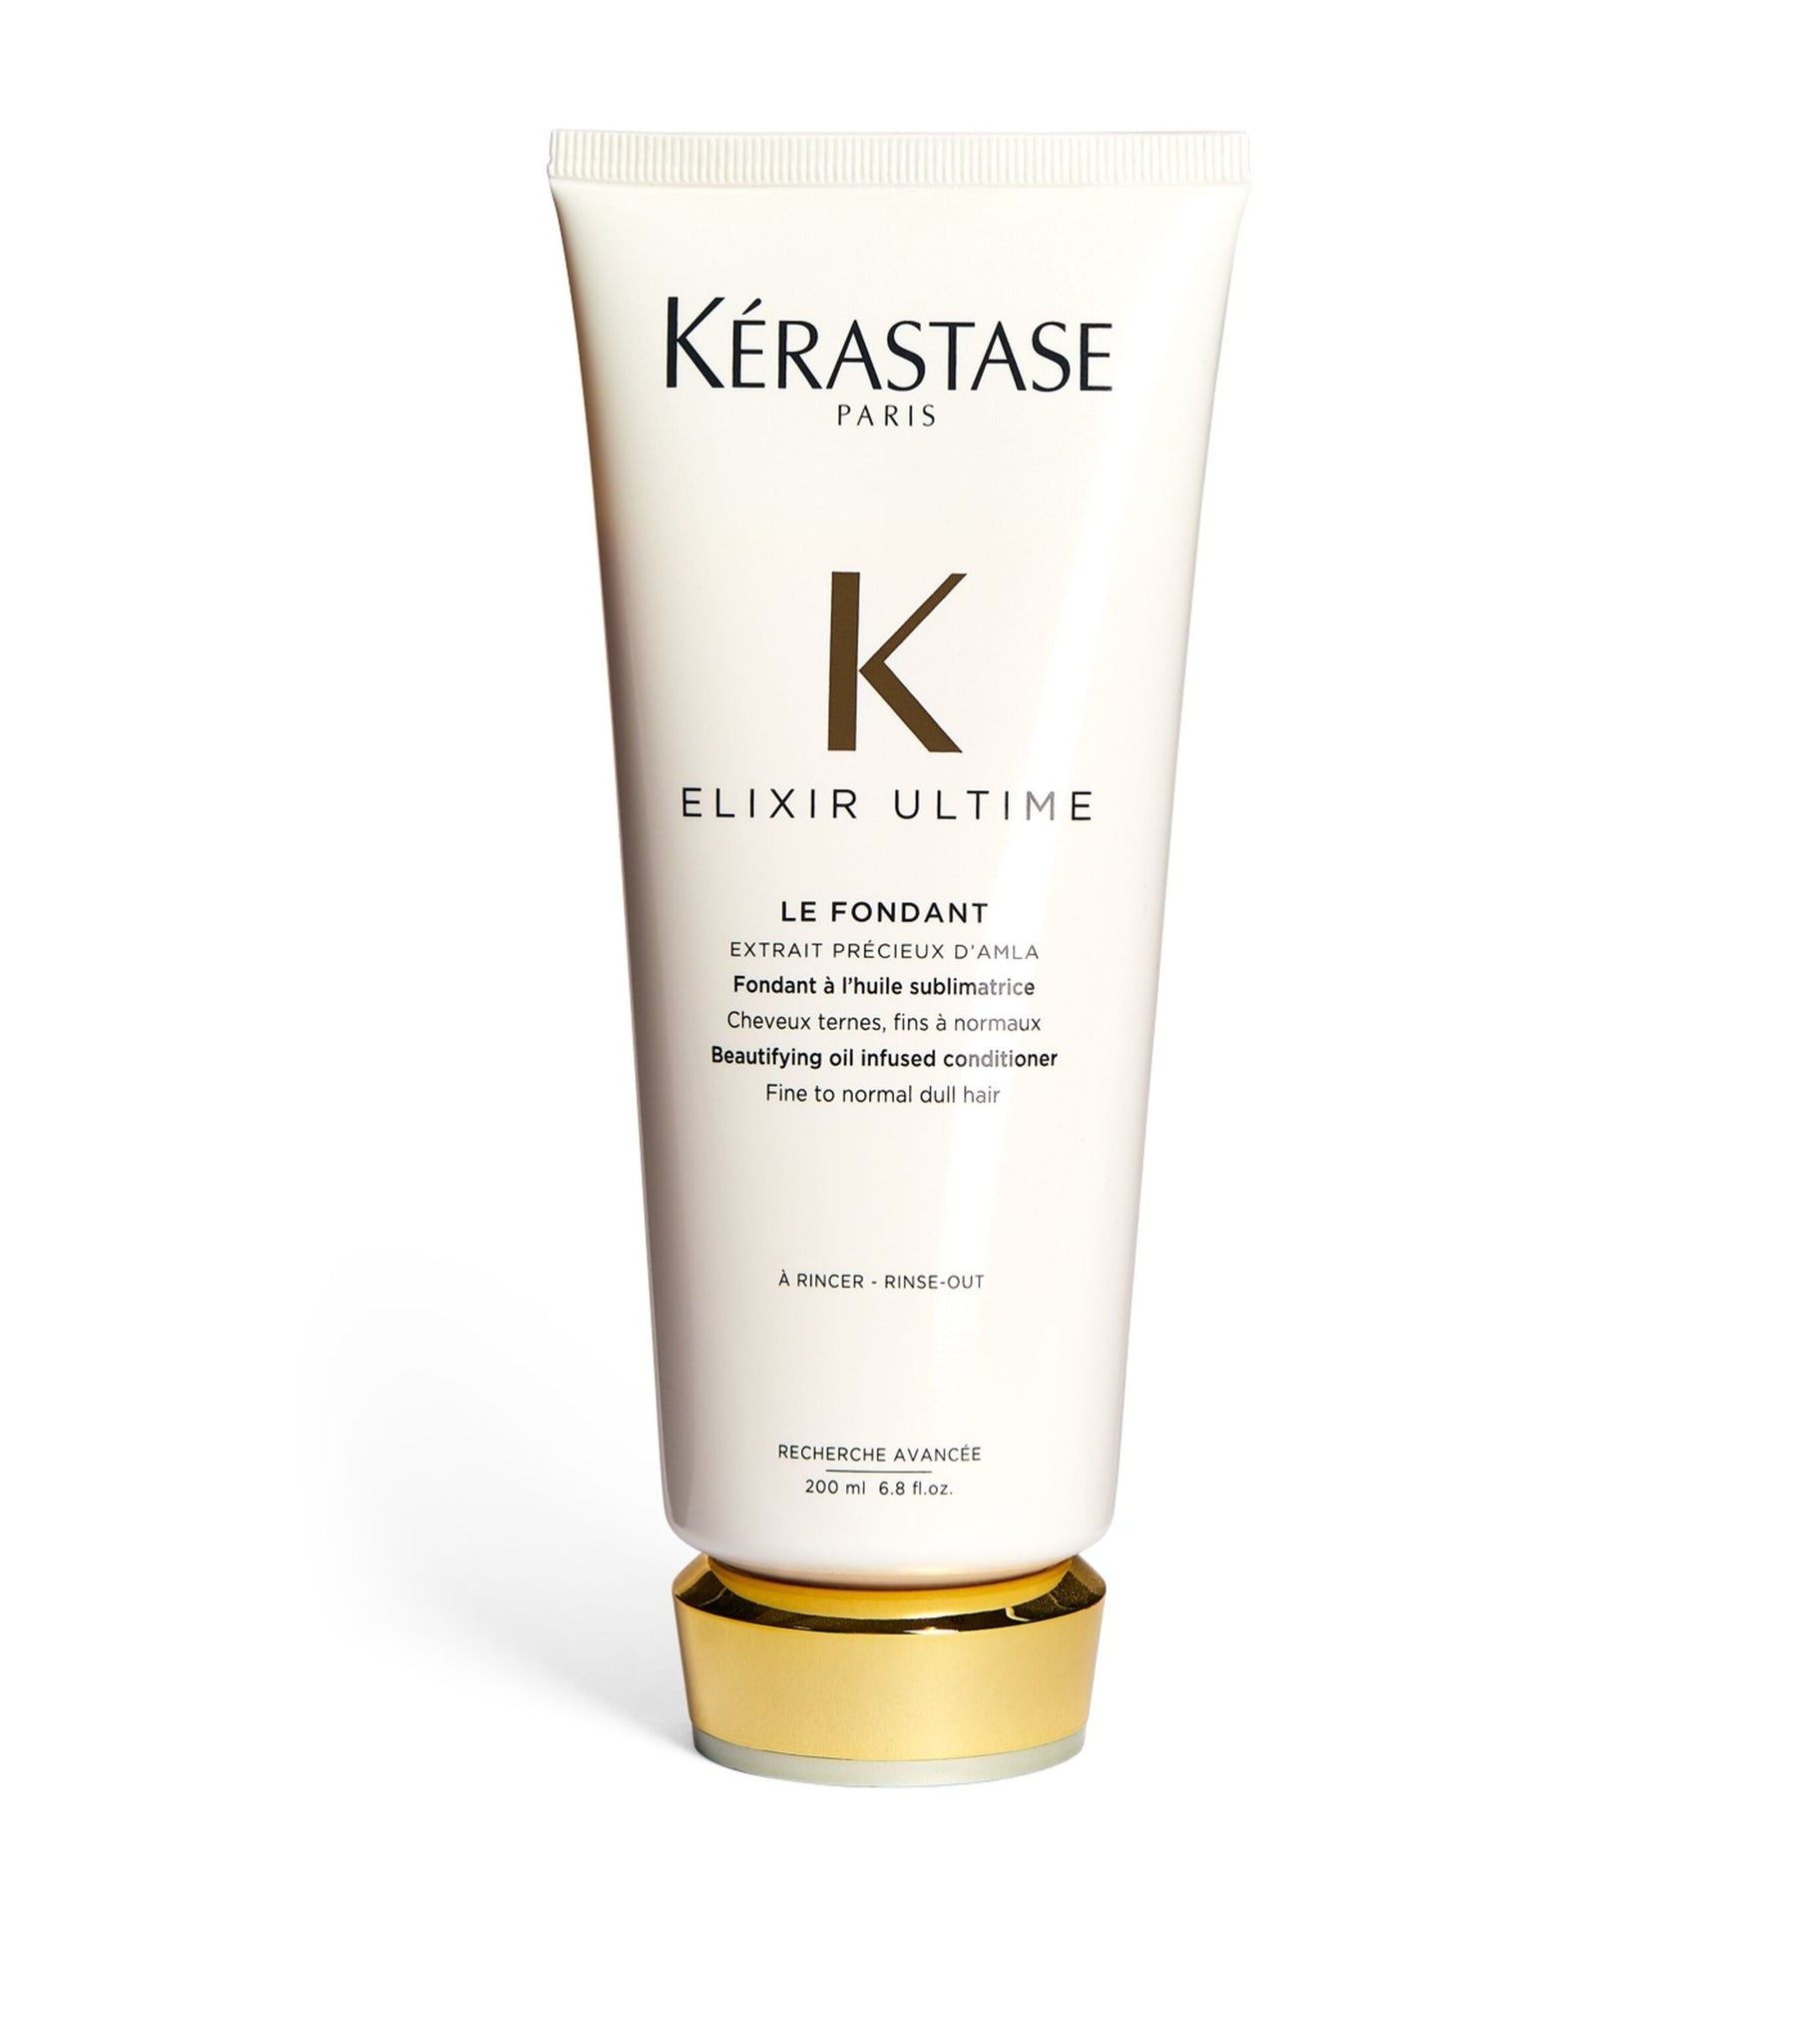 Kérastase's elixir ultime hair oil is on sale now at